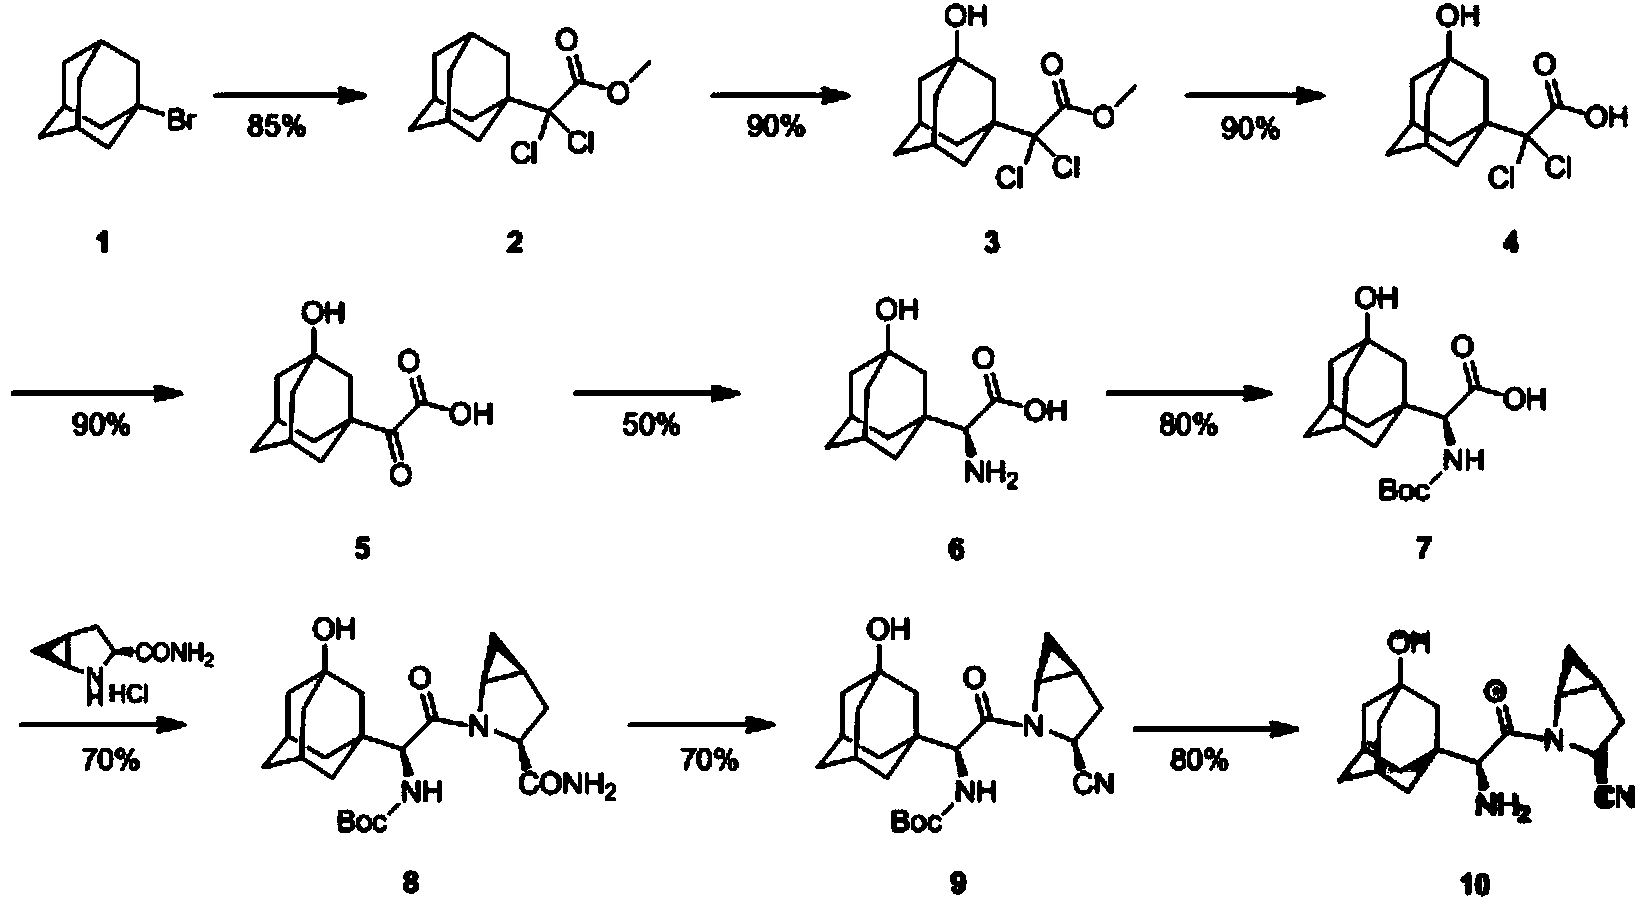 Method for preparing N-tert-butyloxycarbonyl-3-hydroxy-1-adamantyl-d-glycine